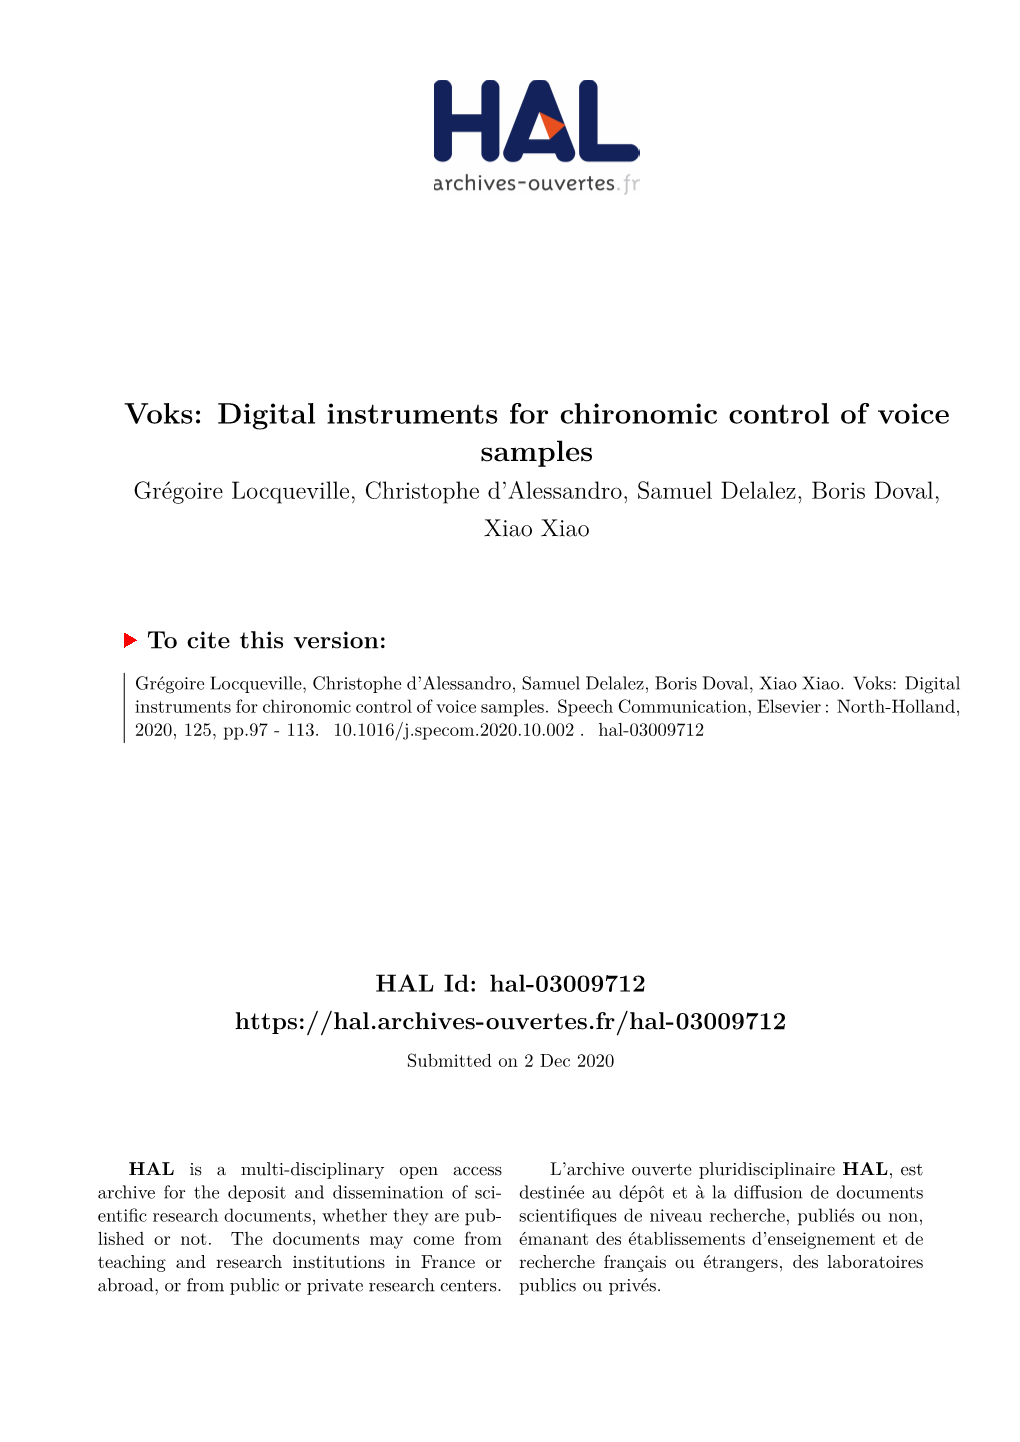 Voks: Digital Instruments for Chironomic Control of Voice Samples Grégoire Locqueville, Christophe D’Alessandro, Samuel Delalez, Boris Doval, Xiao Xiao